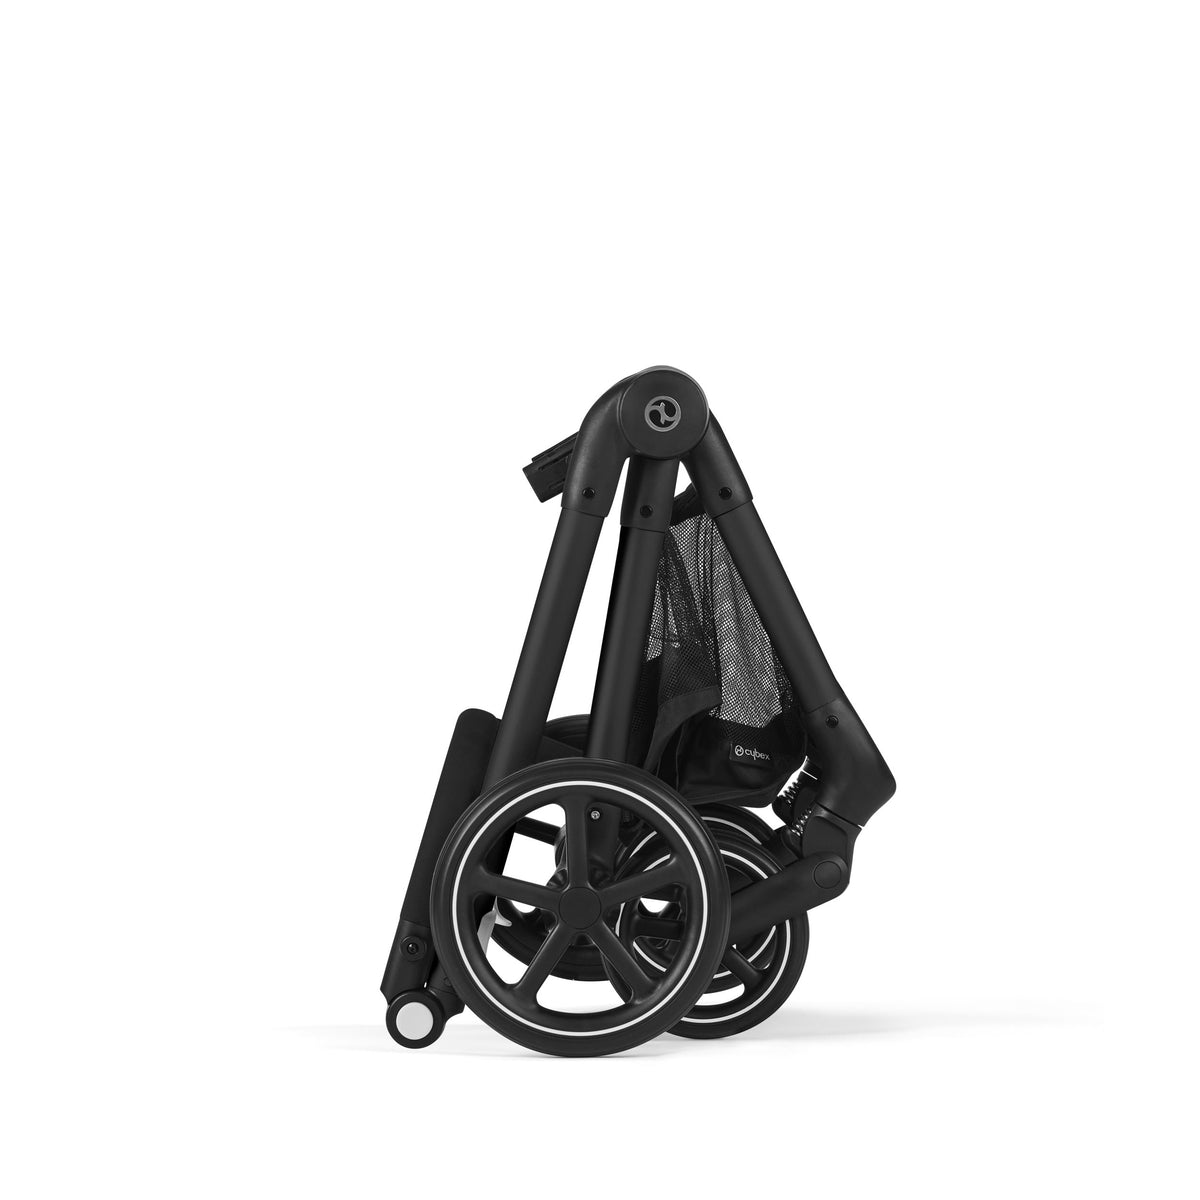 Cybex Balios S Lux Stroller in Soho Grey  Price $499.95